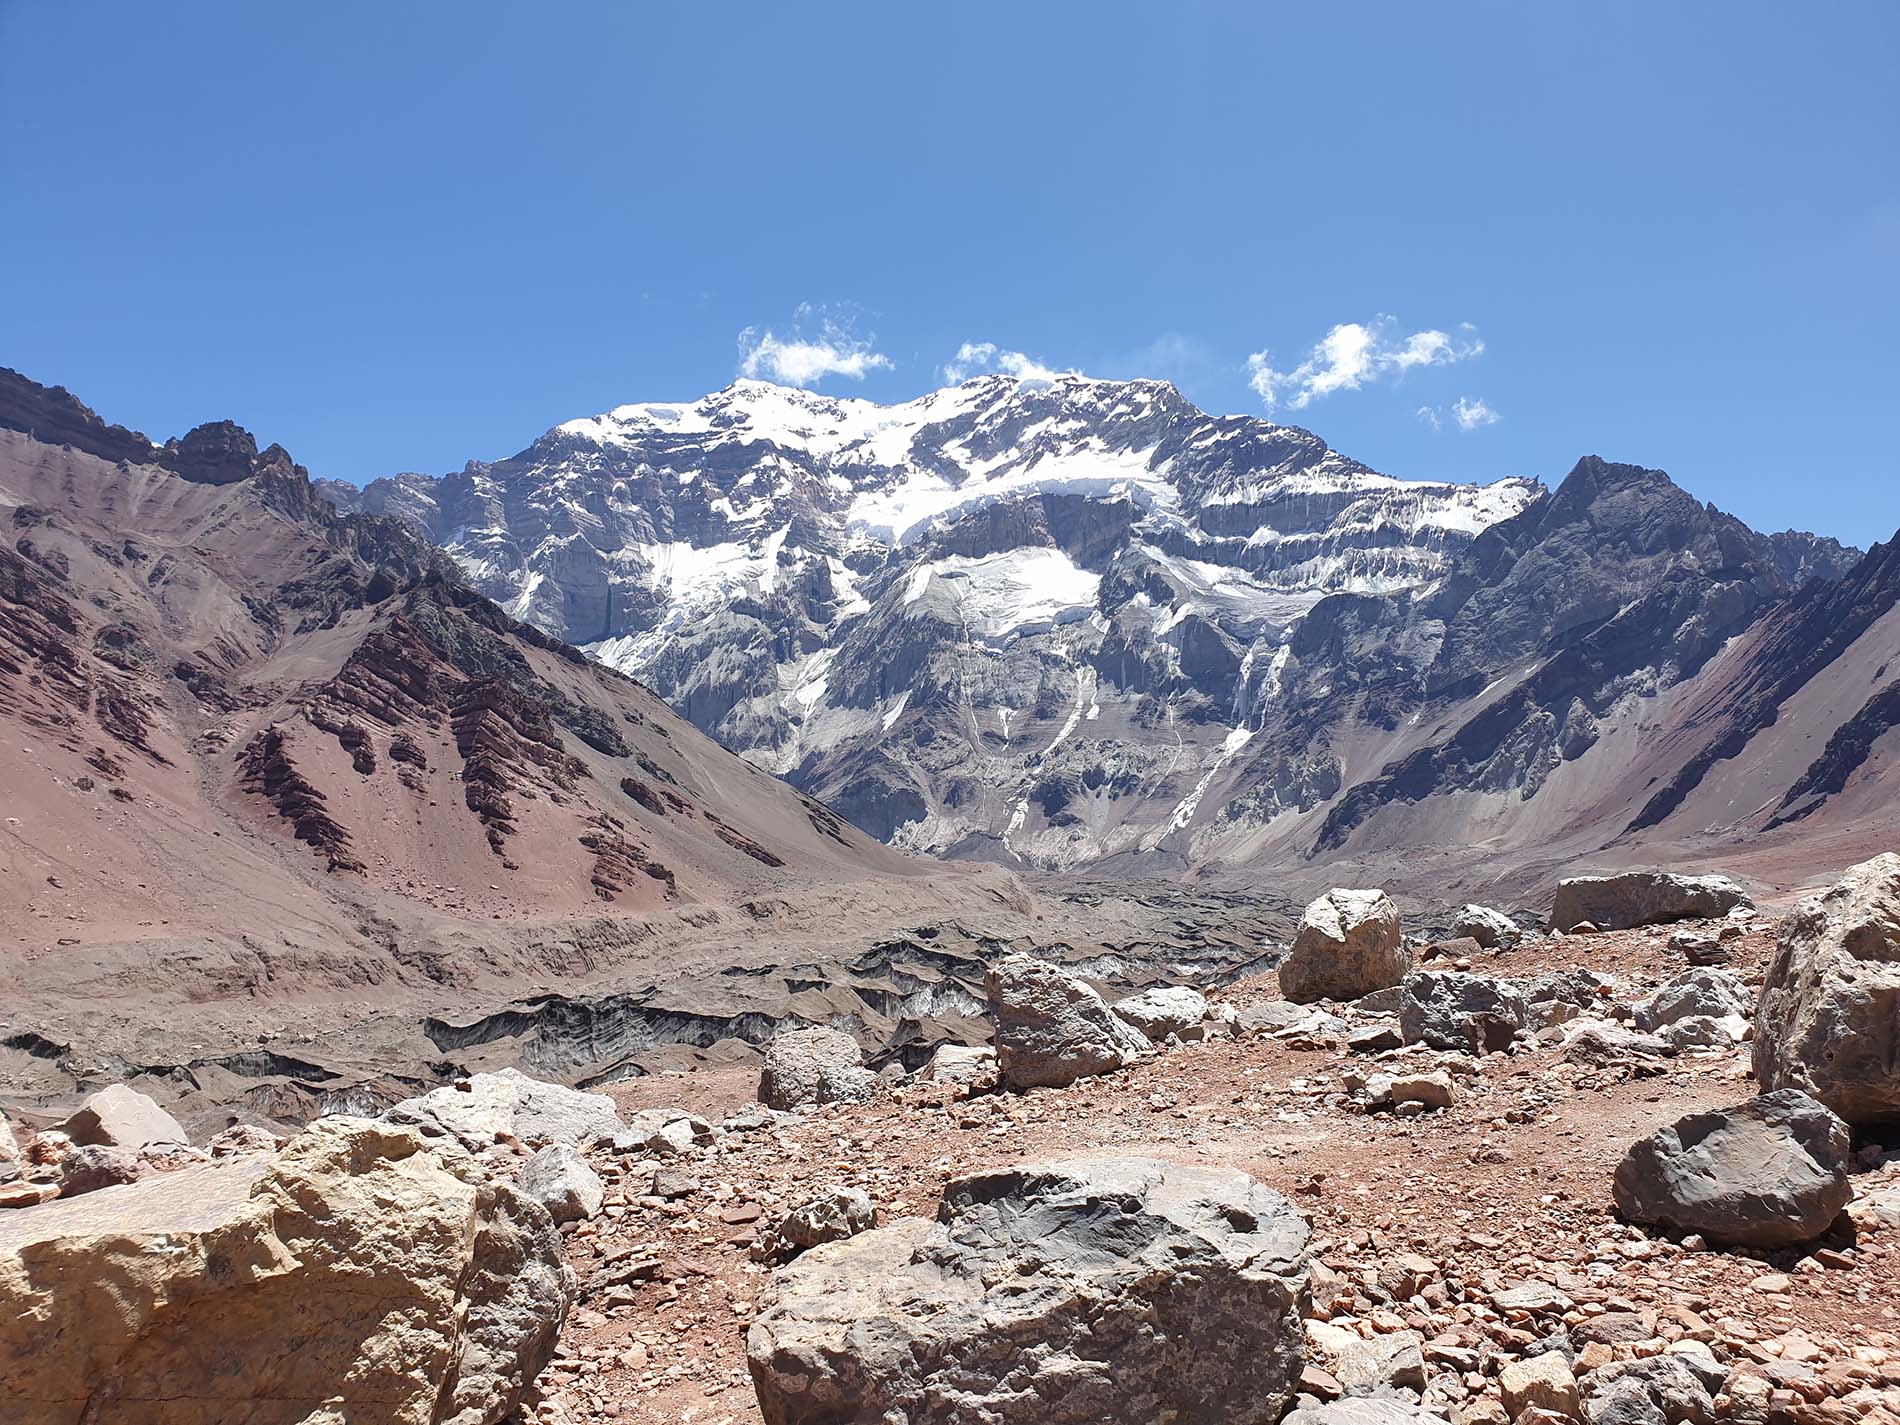 aconcagua najyzszy szczyt andow 02 260922 dan